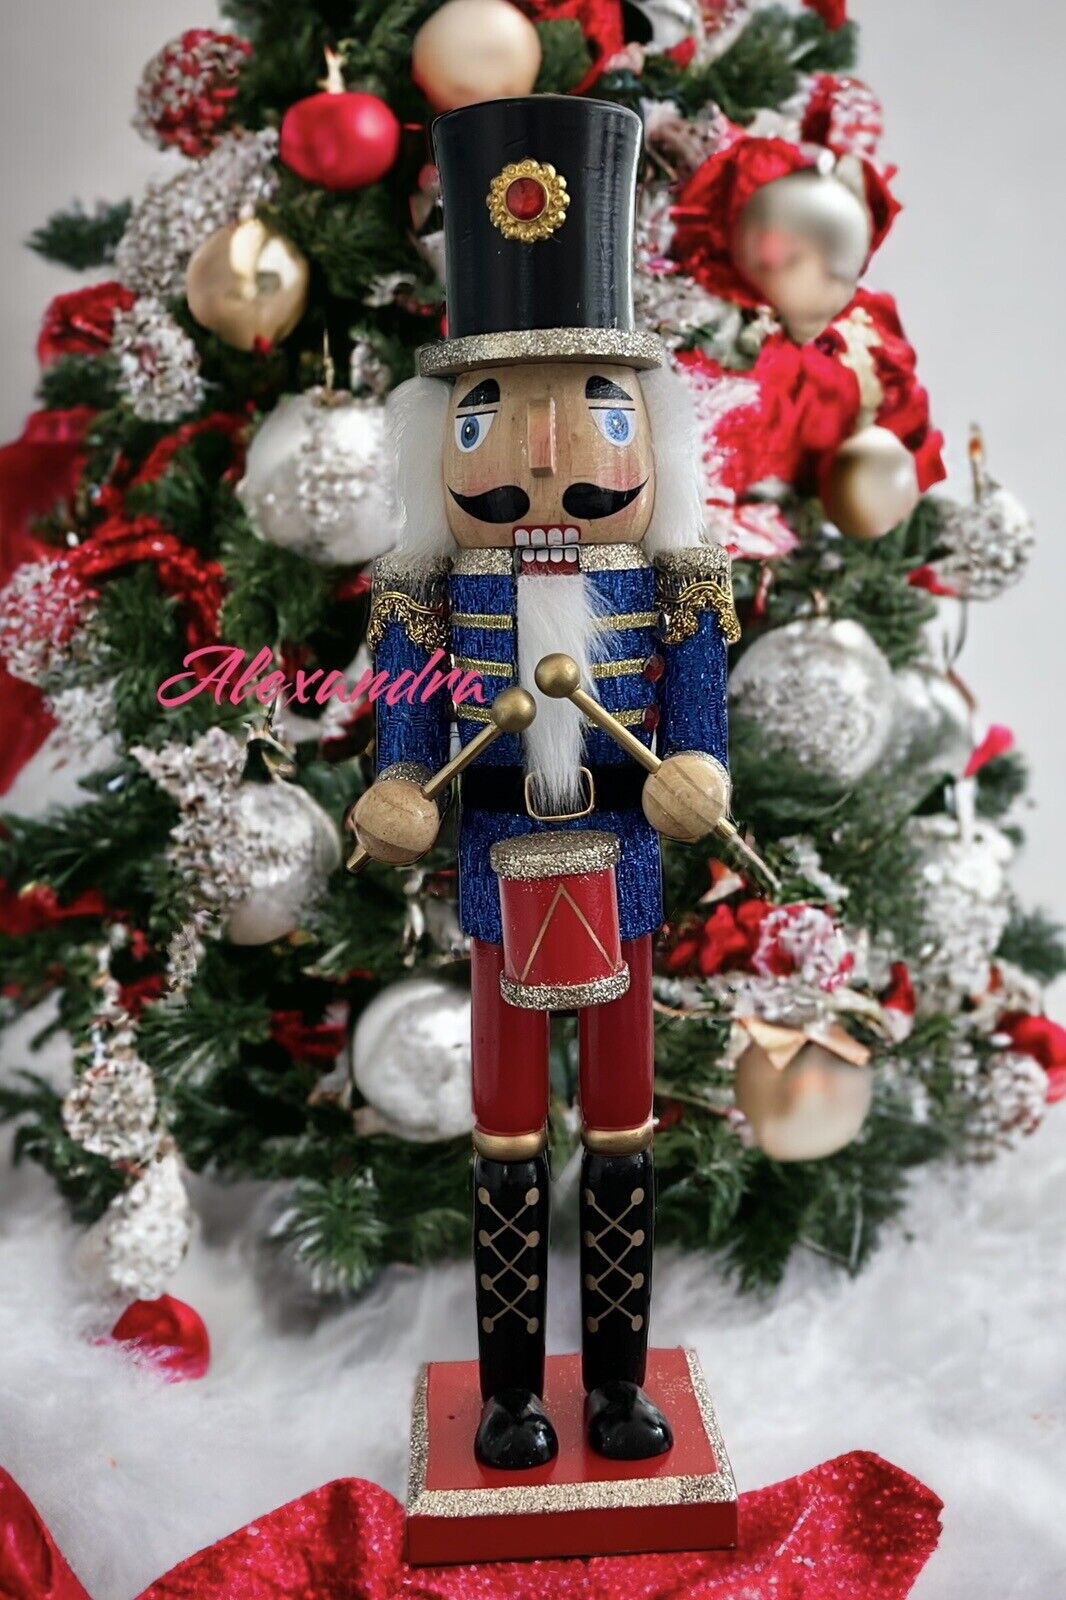 15” Soldier Wooden Nutcracker Drummer In Sparkling Uniform Christmas Decor New